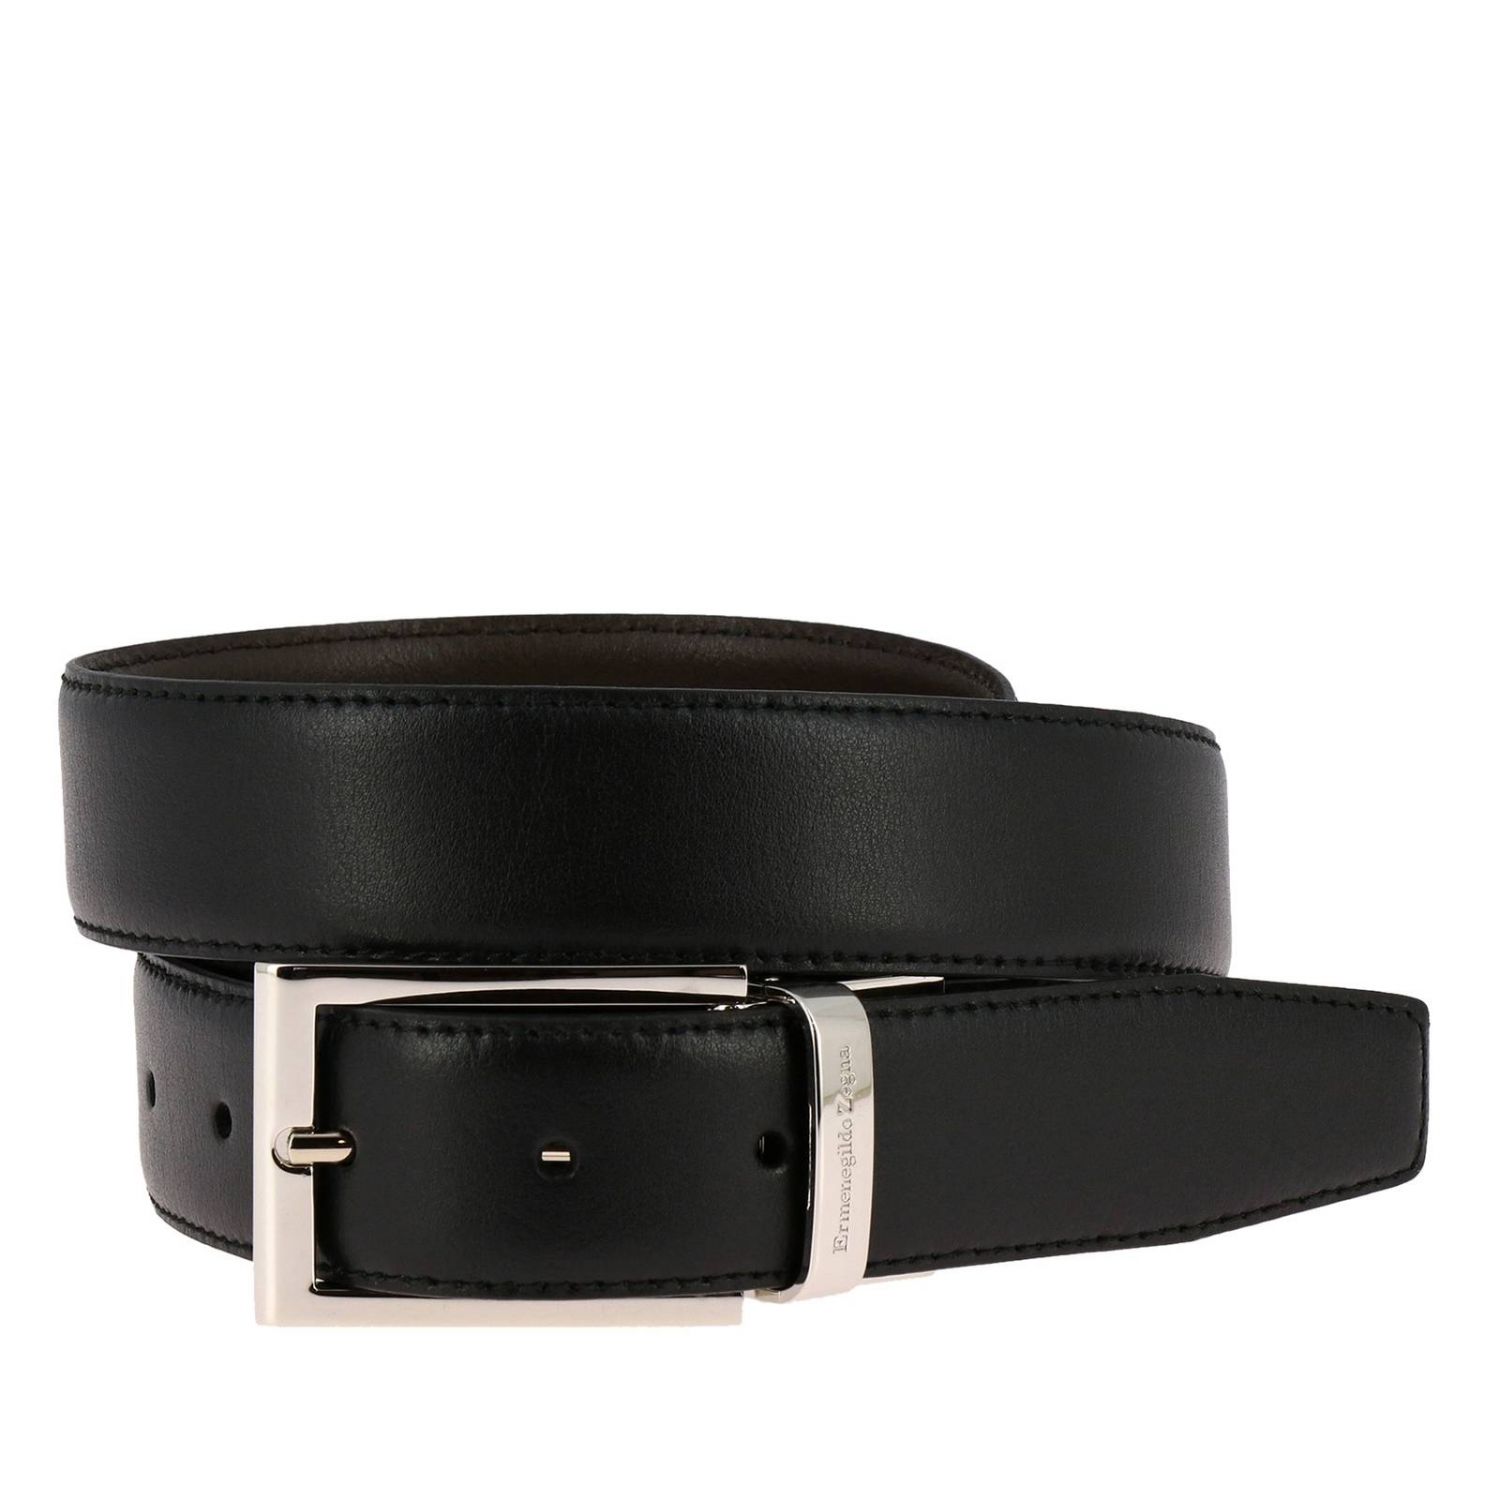 Ermenegildo Zegna Outlet: Classic belt in real reversible leather ...